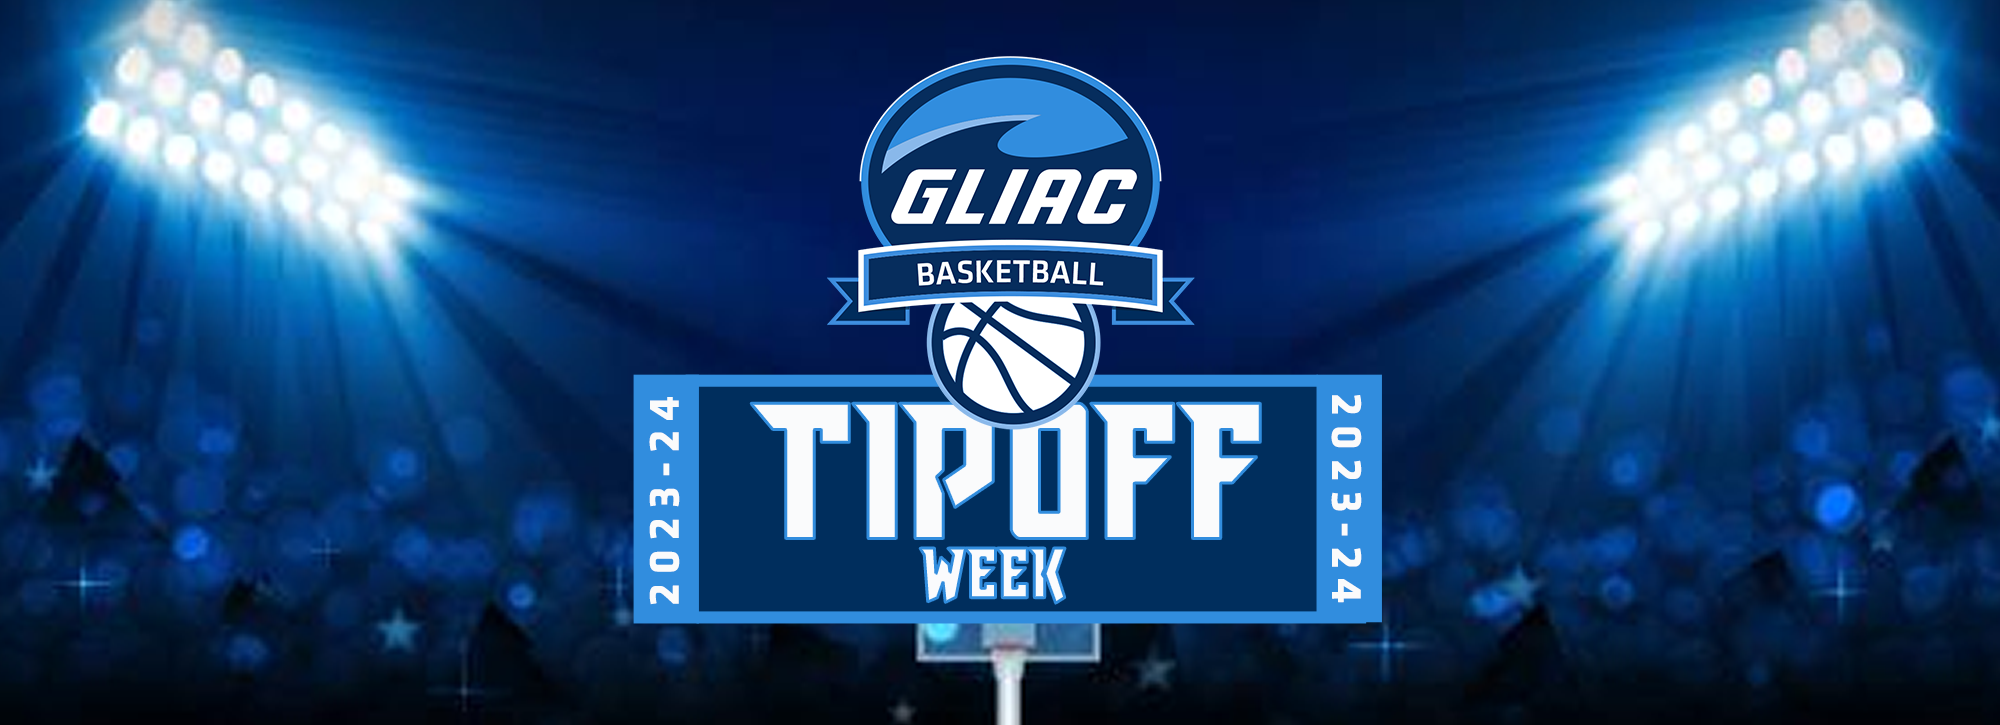 League play opens this week for GLIAC Basketball teams